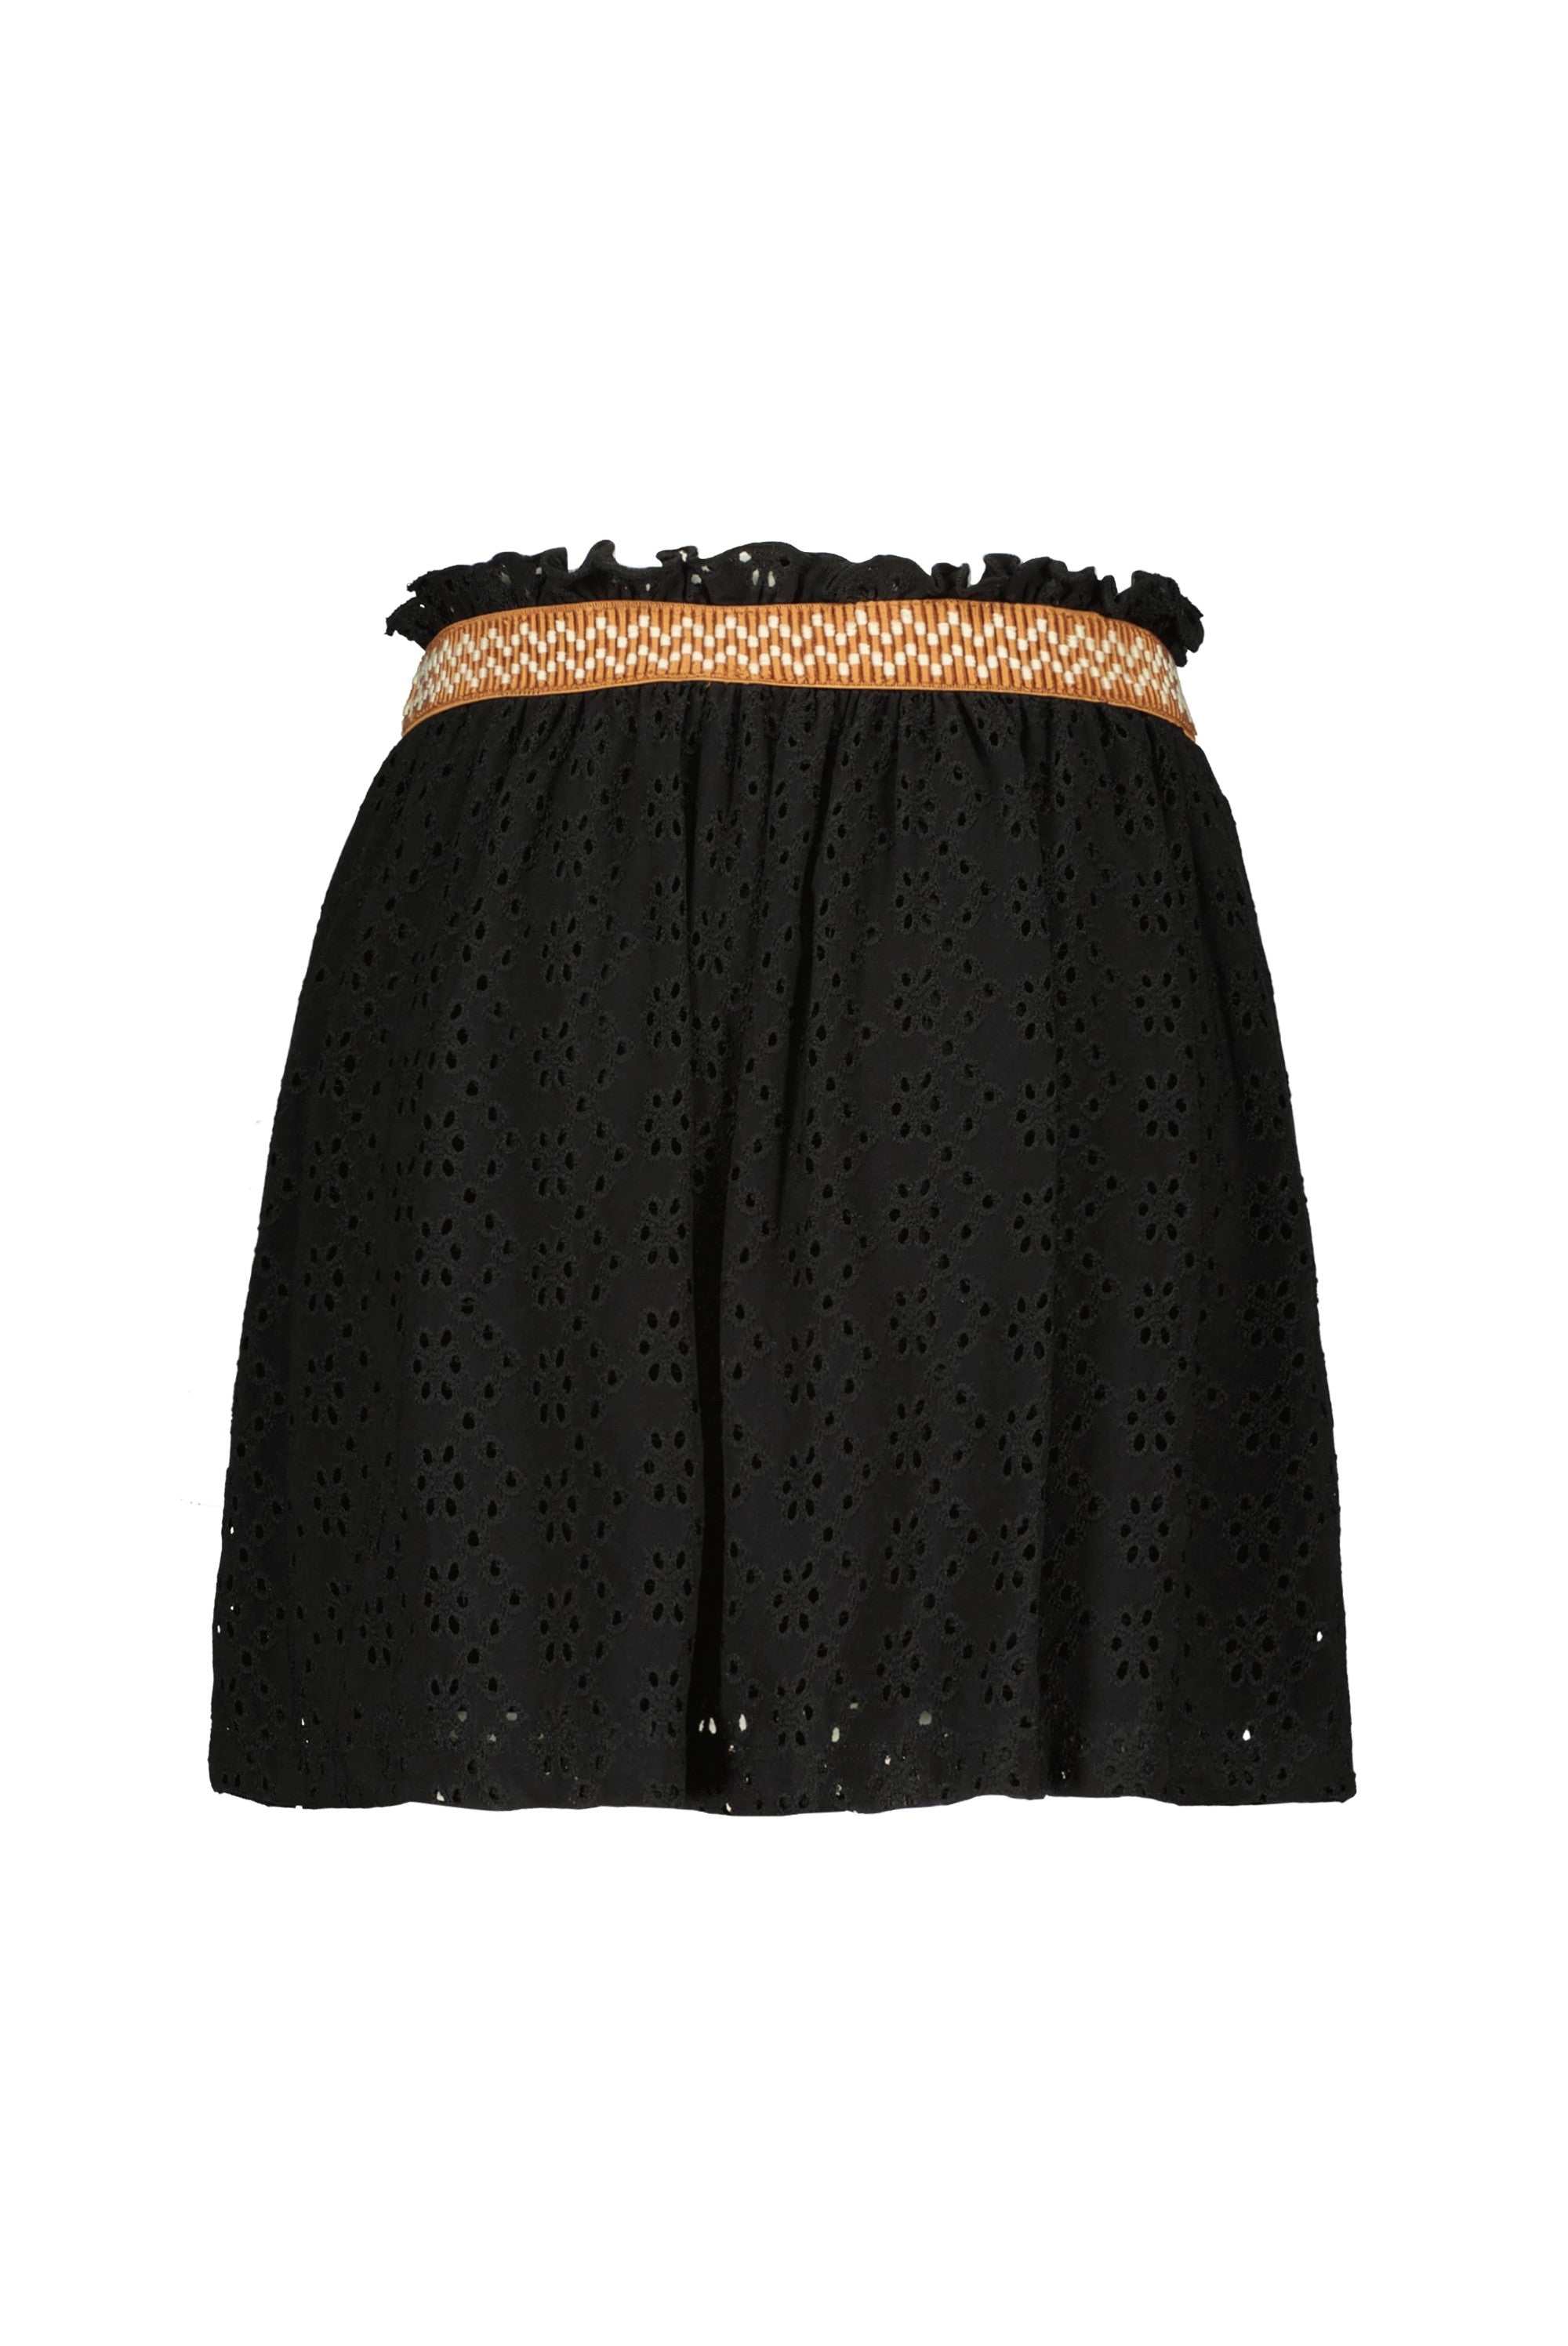 Meisjes Jersey Jacquard Skirt van Like Flo in de kleur Black in maat 152.